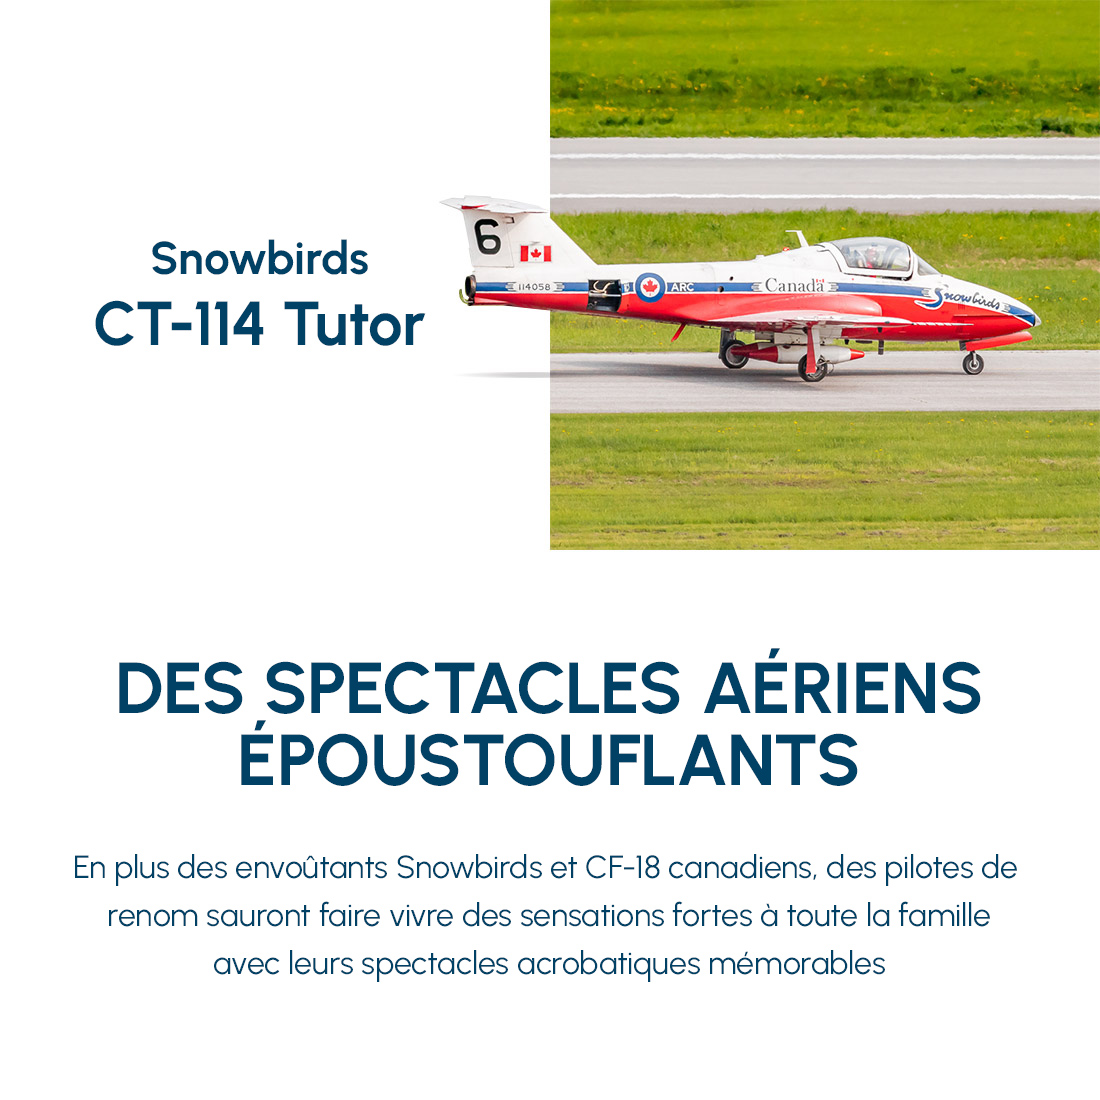 Snowbirds CT-114 tutor